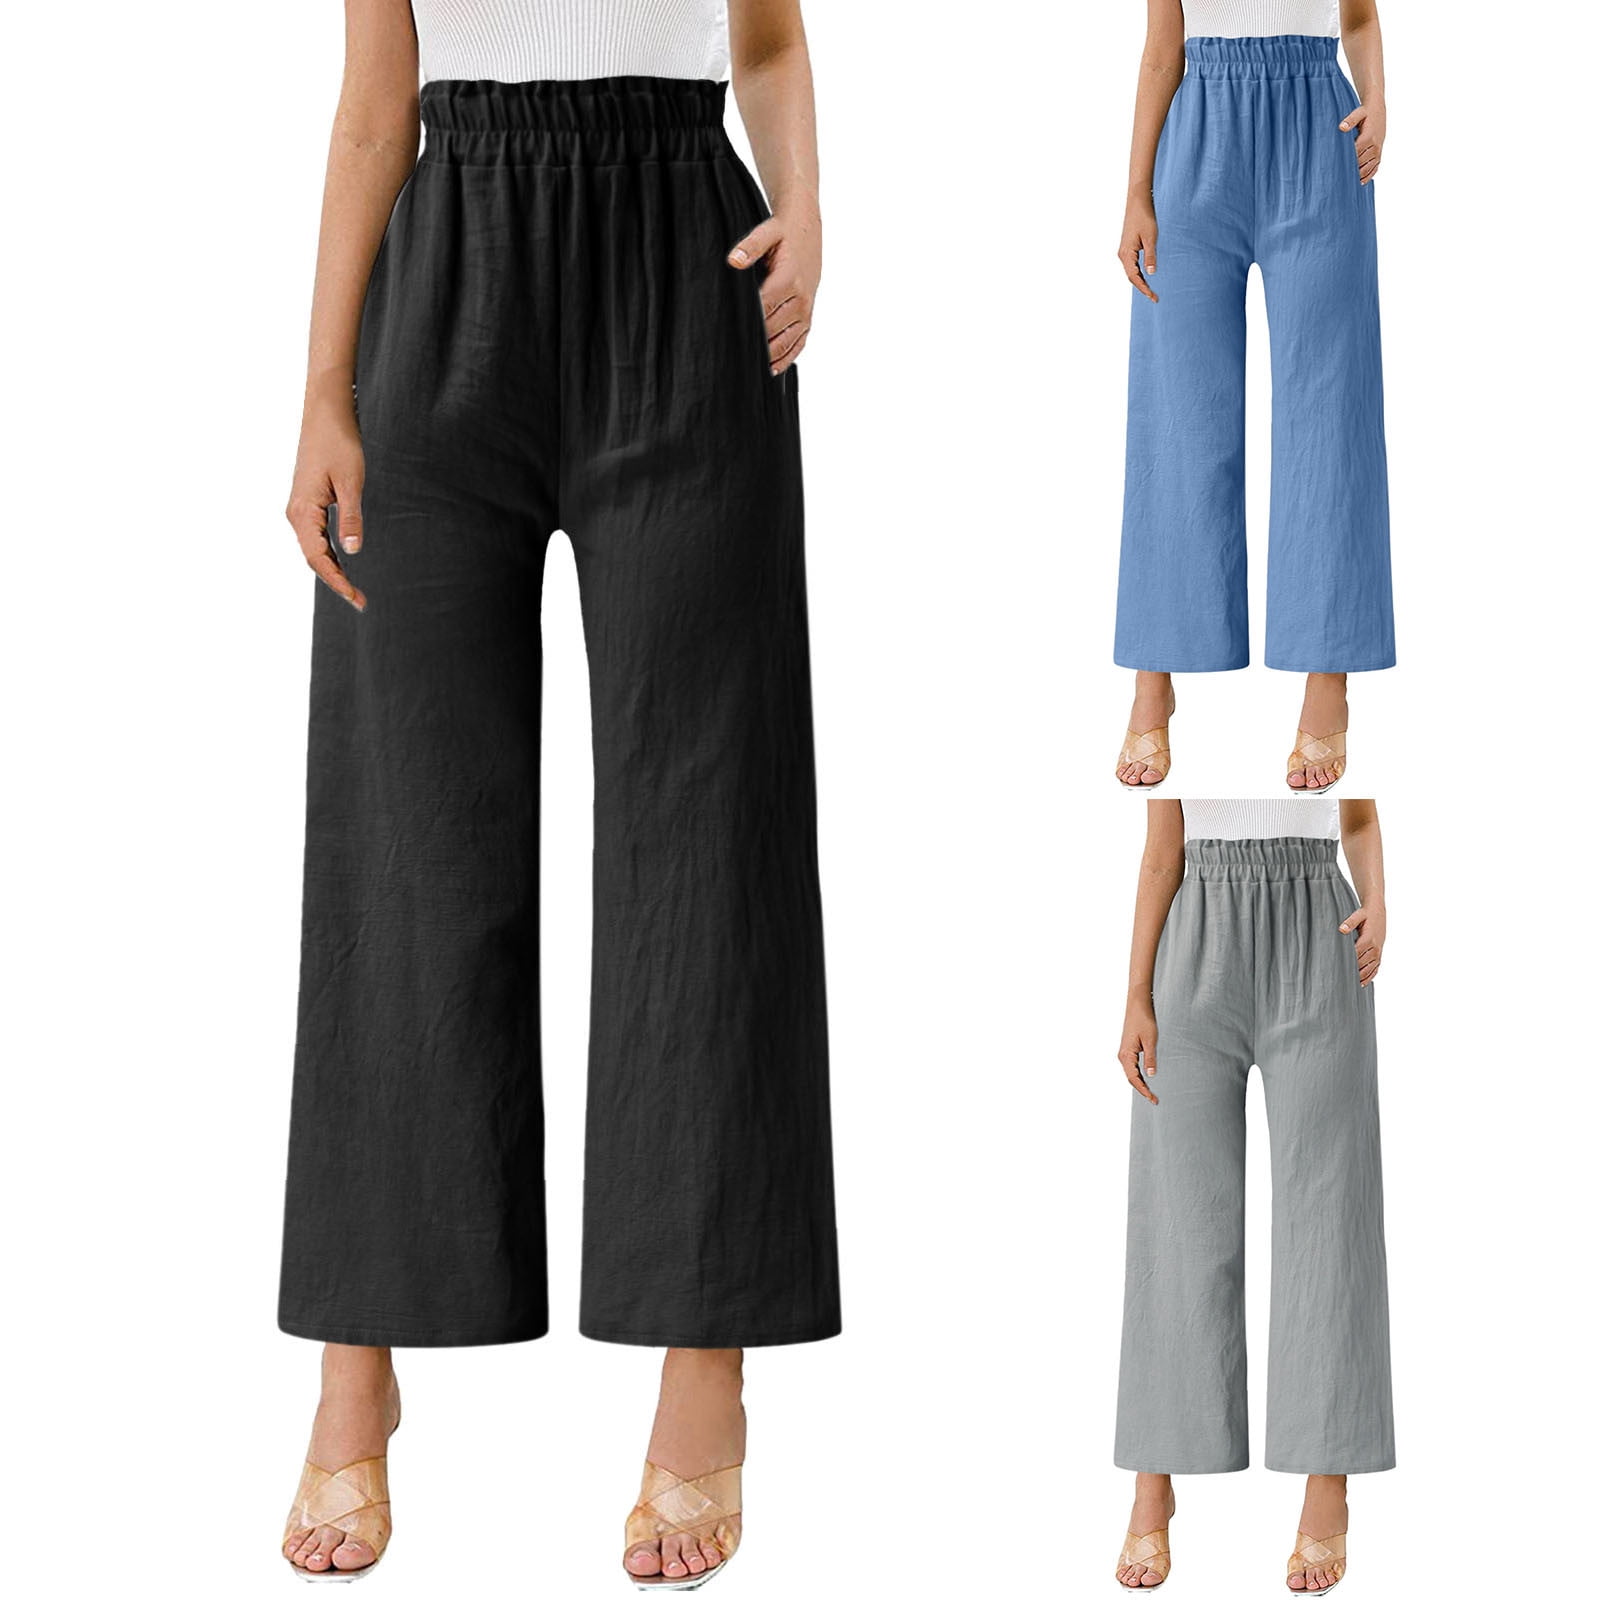 eczipvz Pants for Women Women's Drawstring Waist Striped Side Jogger  Sweatpants with Pocket Grey,XXL - Walmart.com